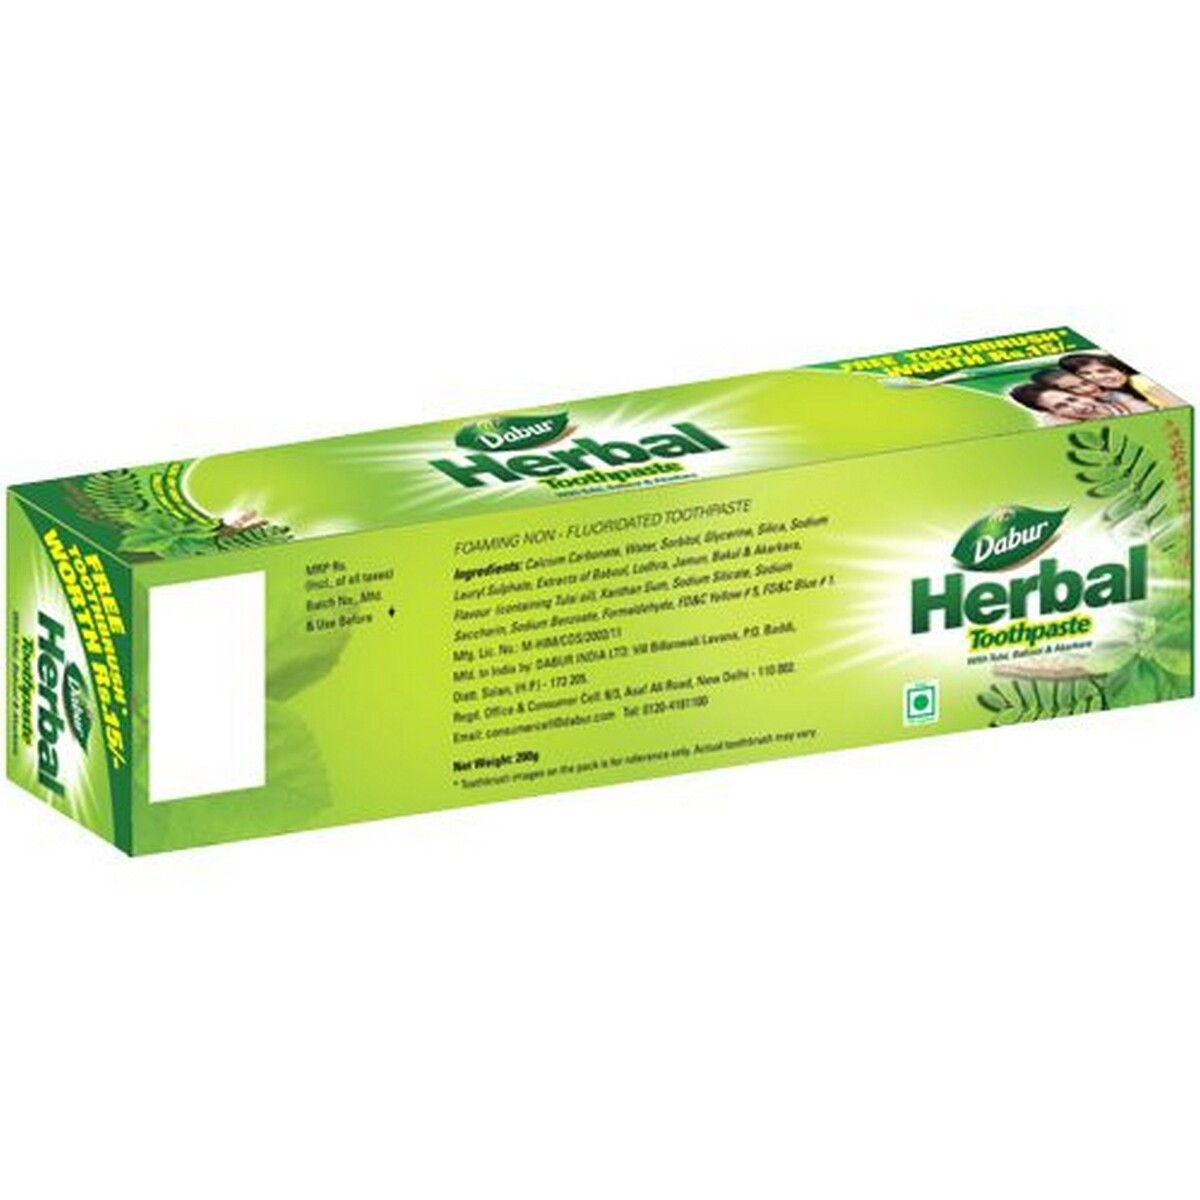 Dabur Tooth Paste Herbal 200g